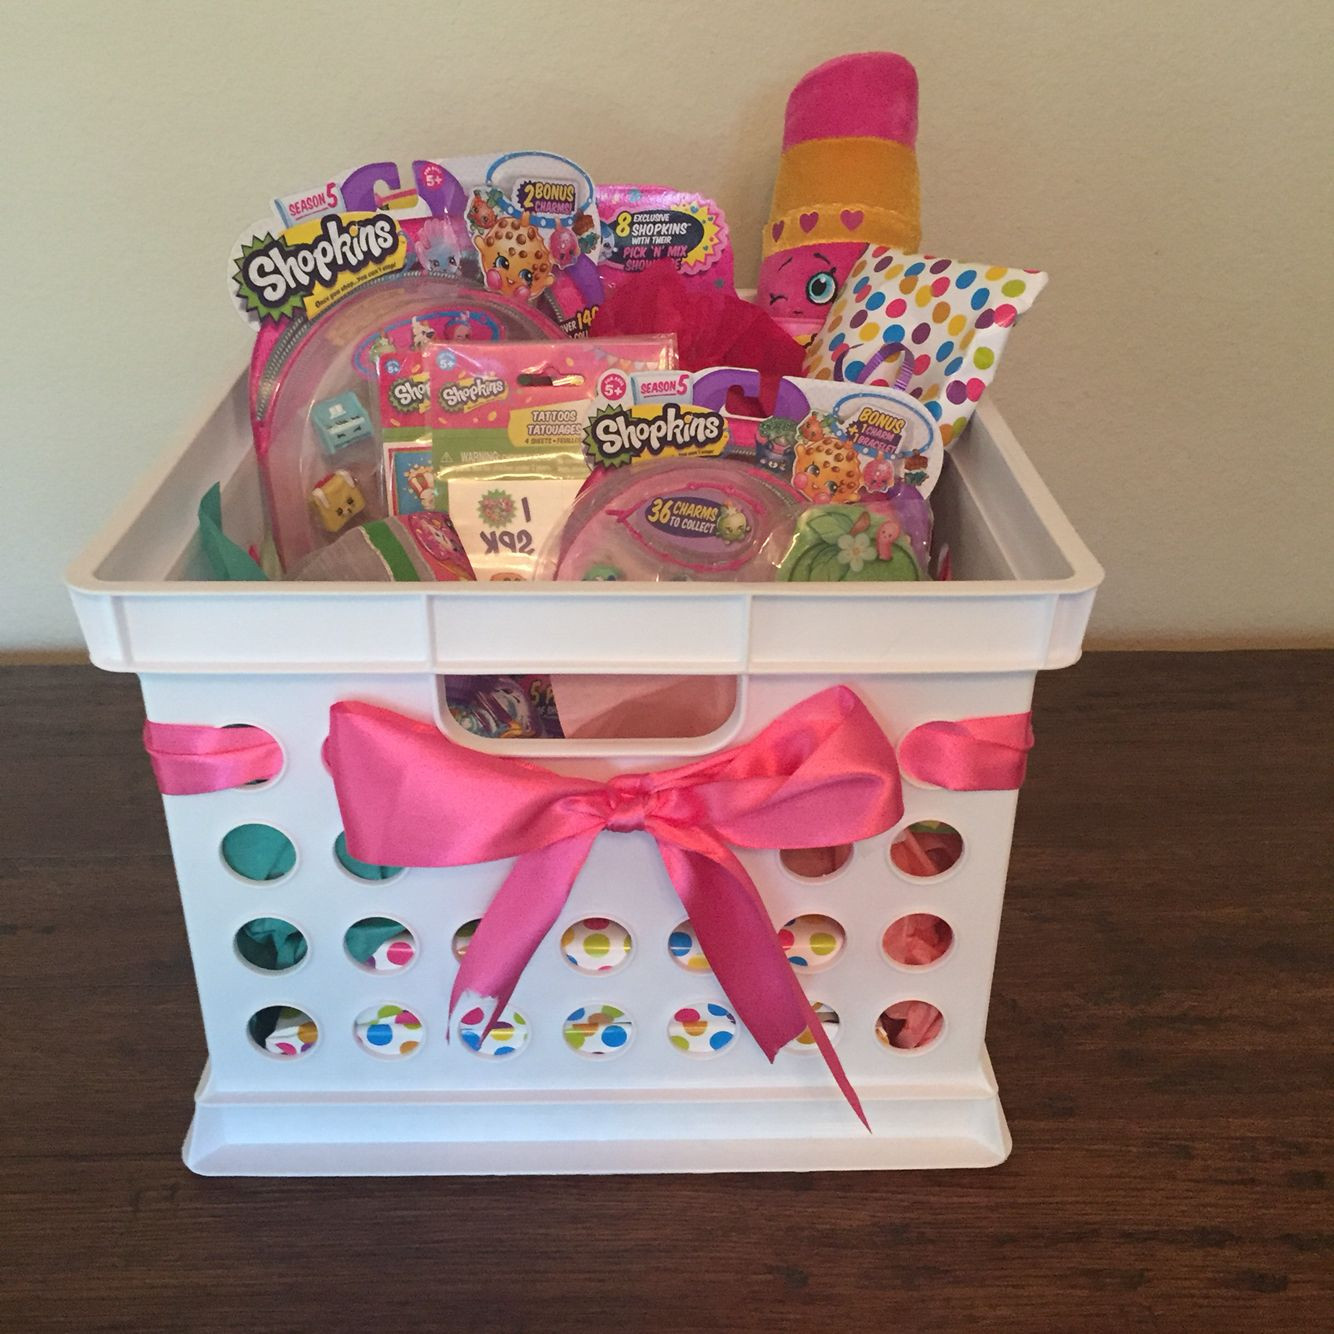 Gift Basket Ideas For Children
 Shopkins Gift Basket